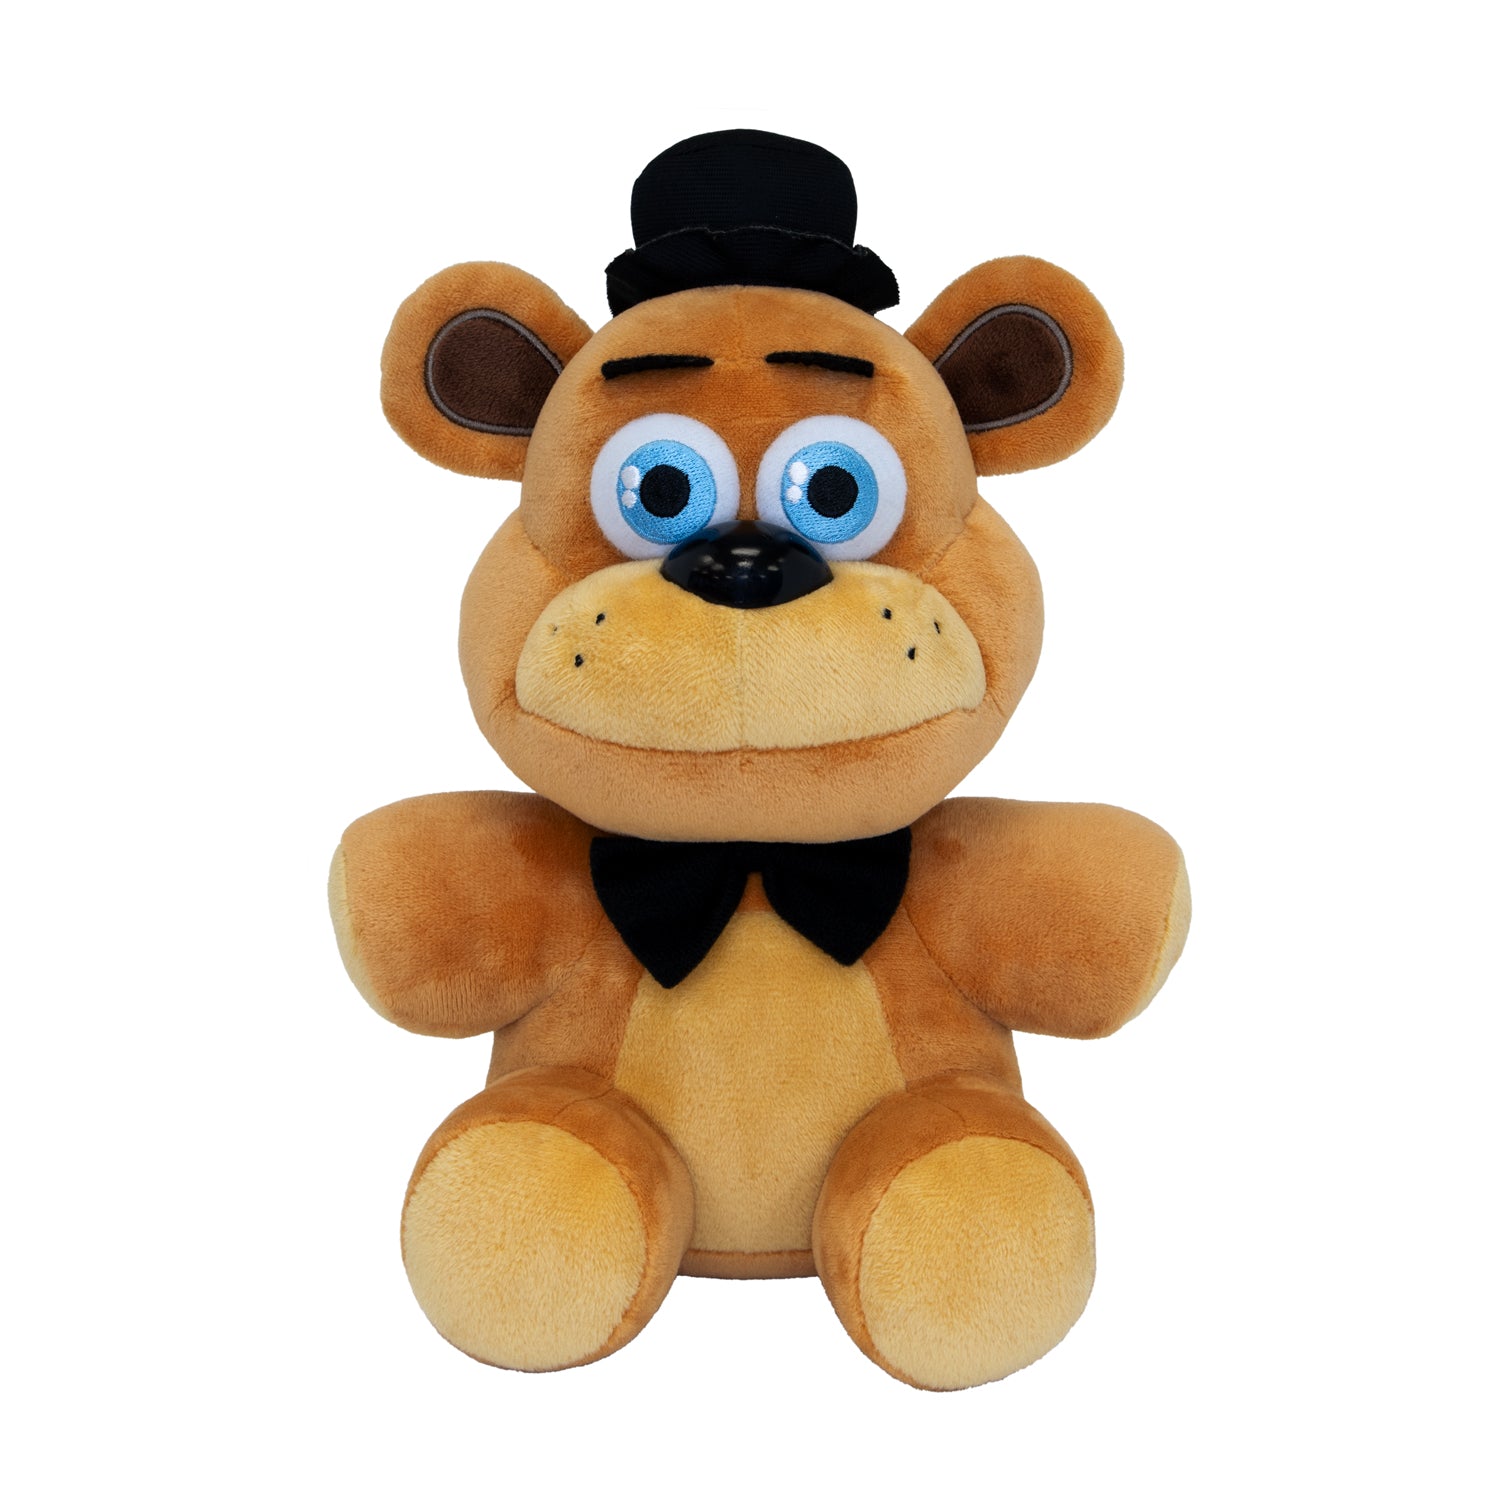 Funko Five Nights at Freddy's Freddy Fazbear 18in Plush Stuffed Collectible  for sale online